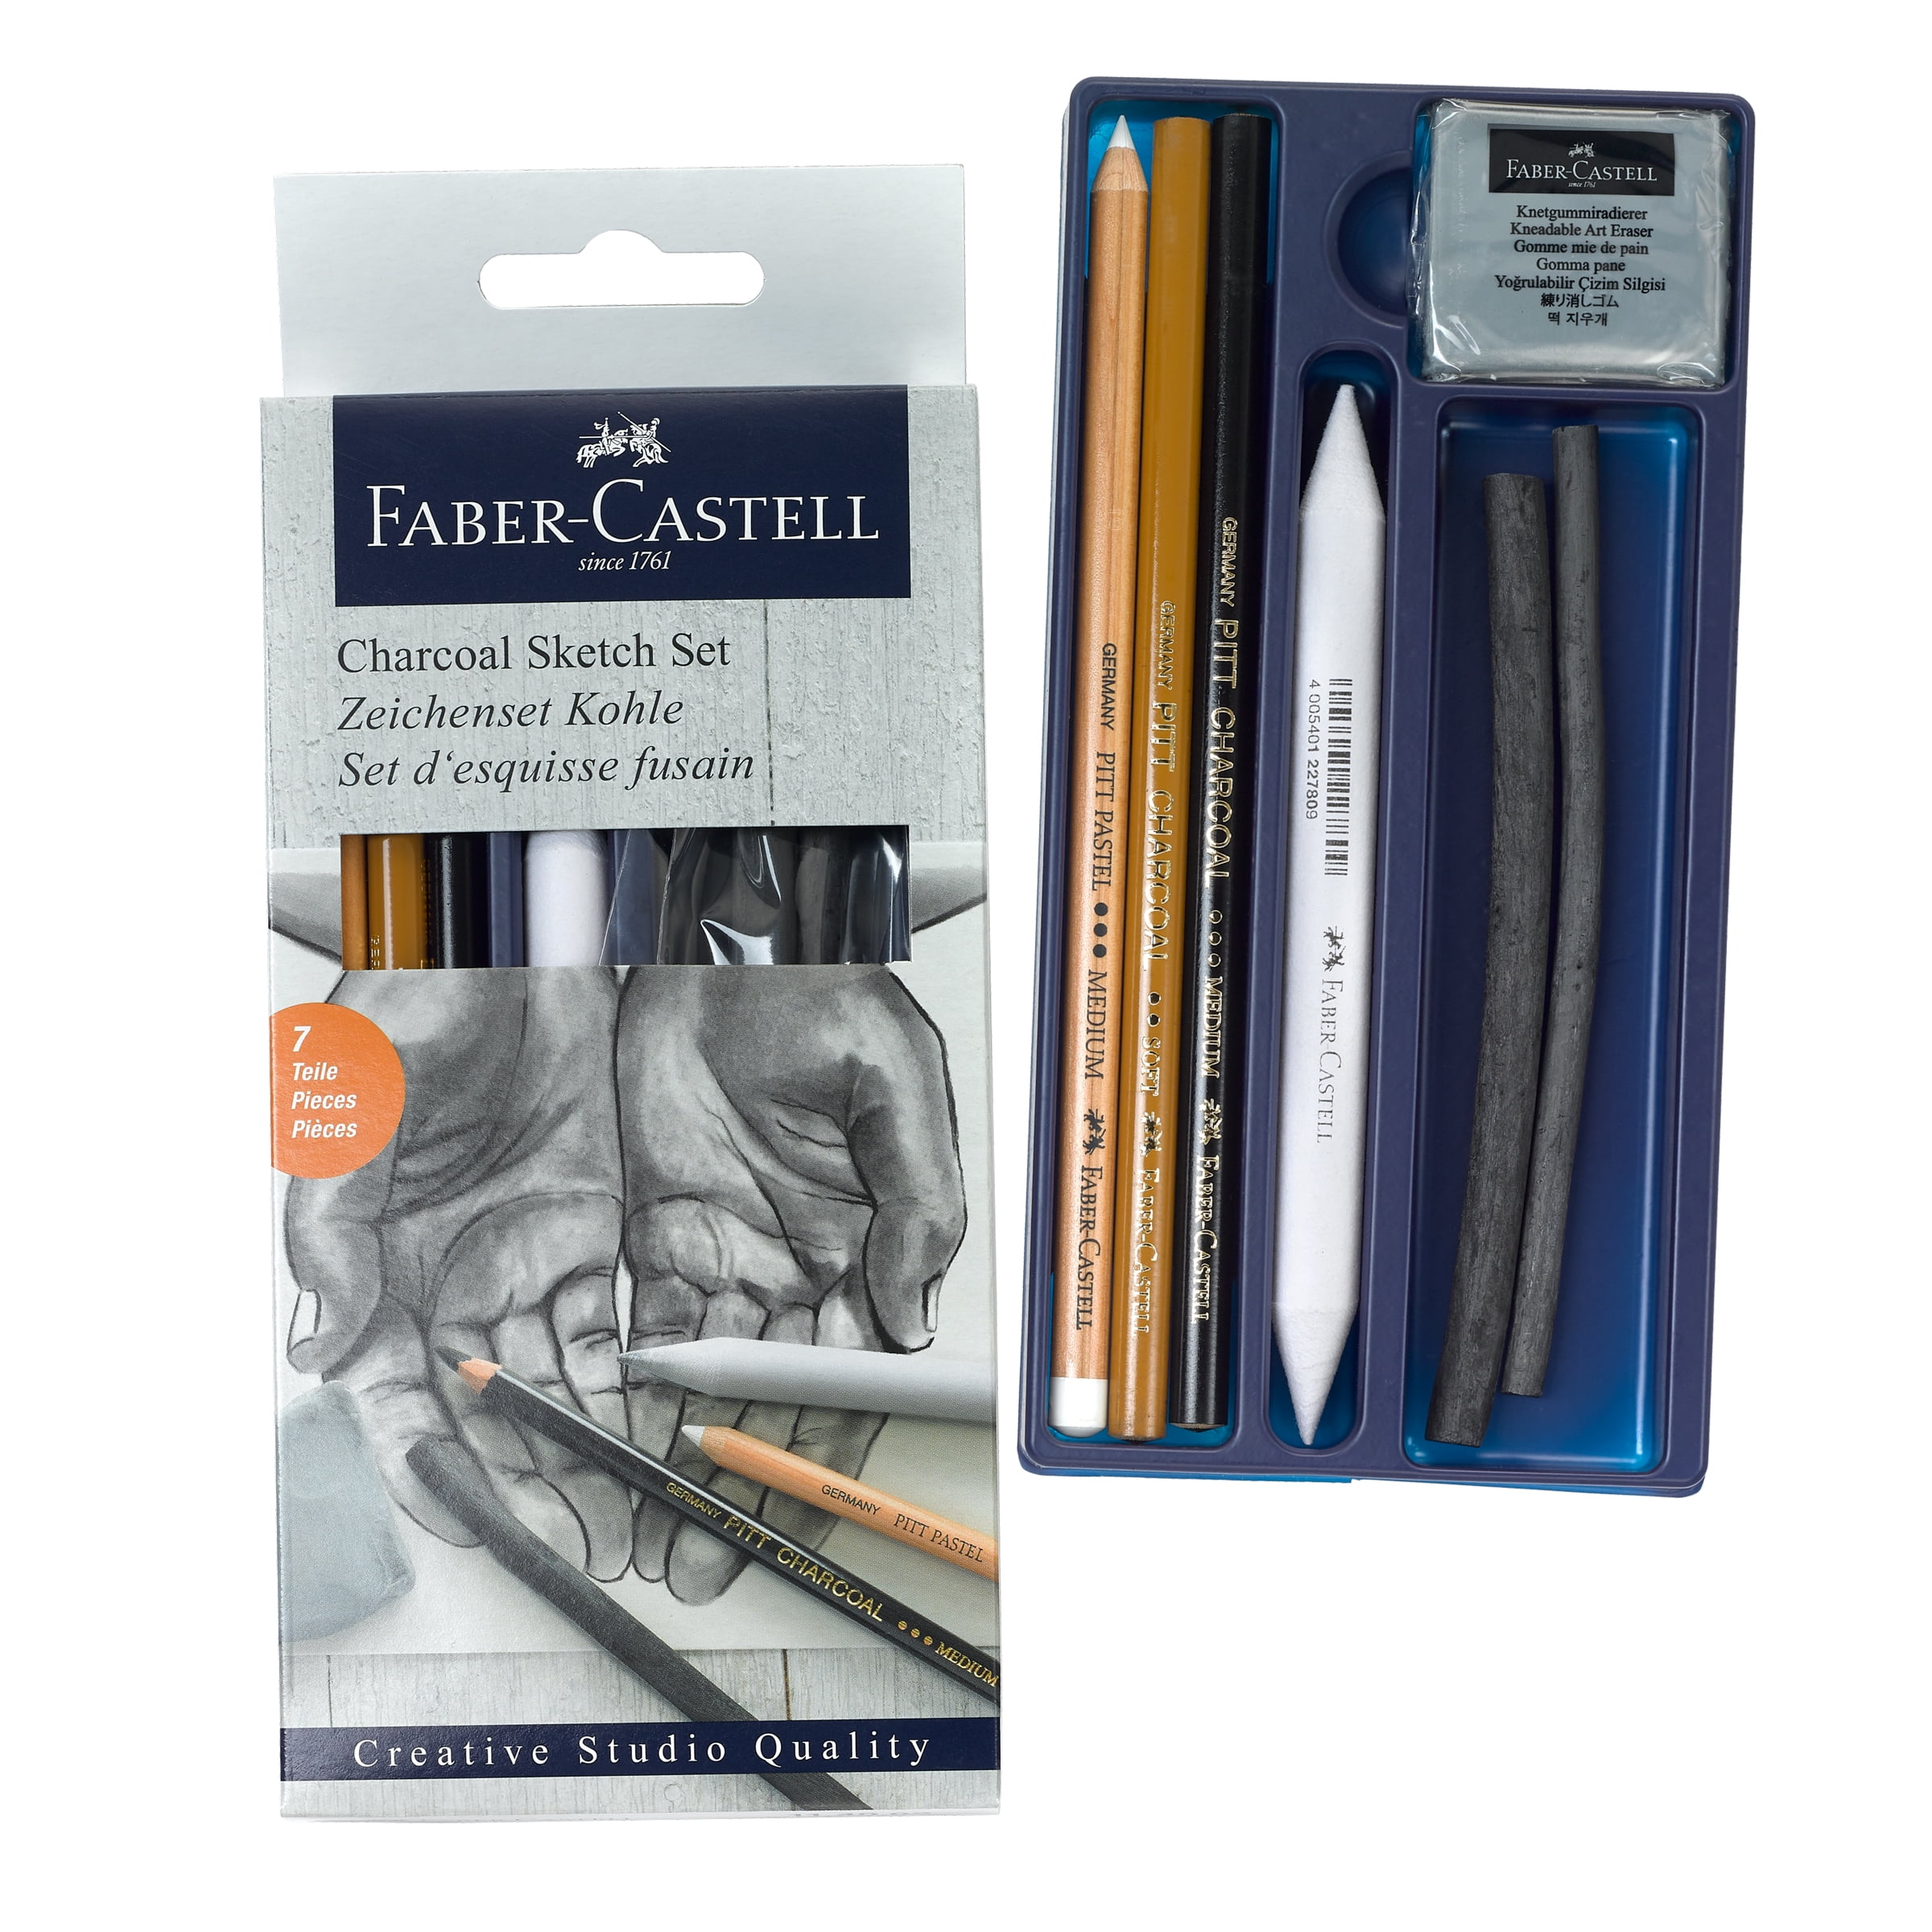 Faber-castell 7pc Charcoal Sketch Set : Target